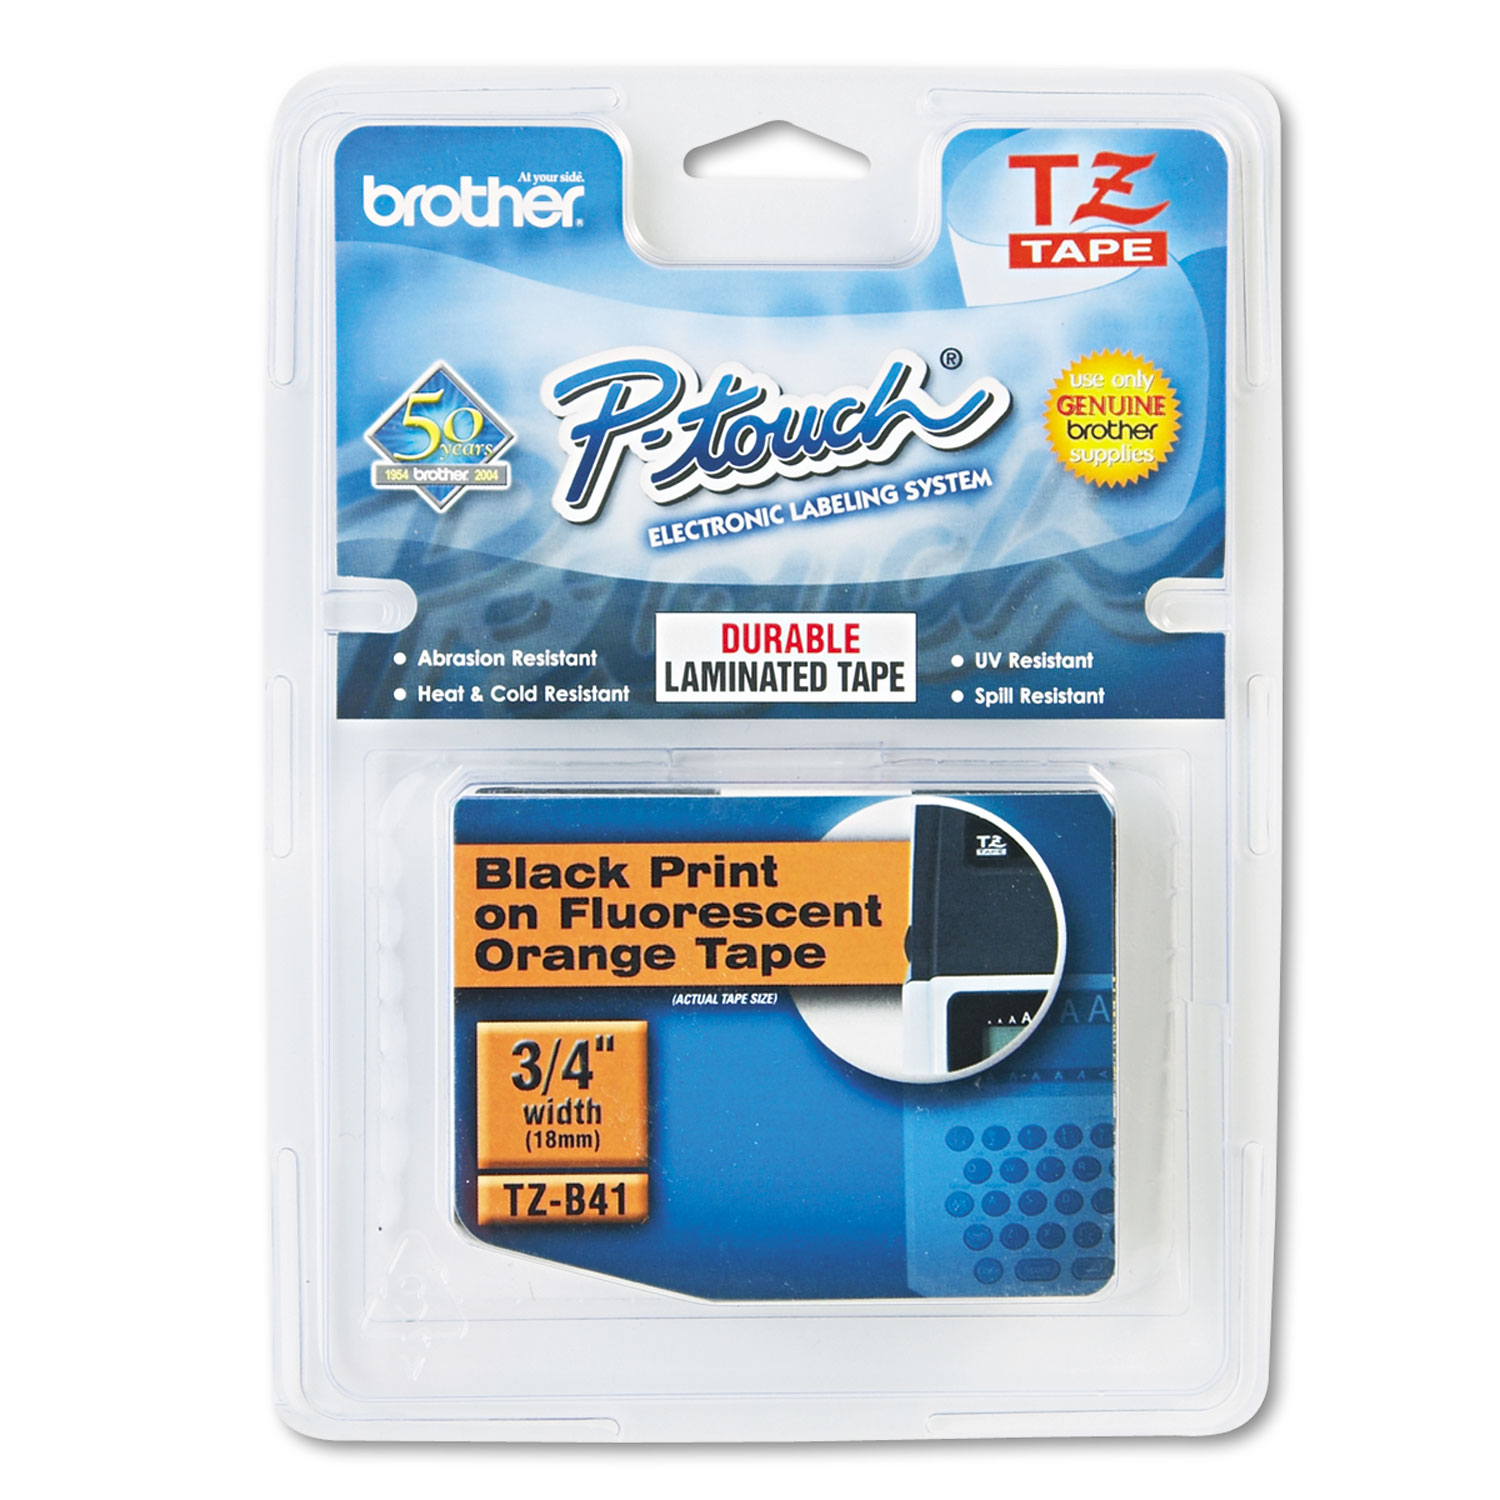  Brother P-Touch TZEB41 TZ Standard Adhesive Laminated Labeling Tape, 0.7 x 16.4 ft, Black on Fluorescent Orange (BRTTZEB41) 